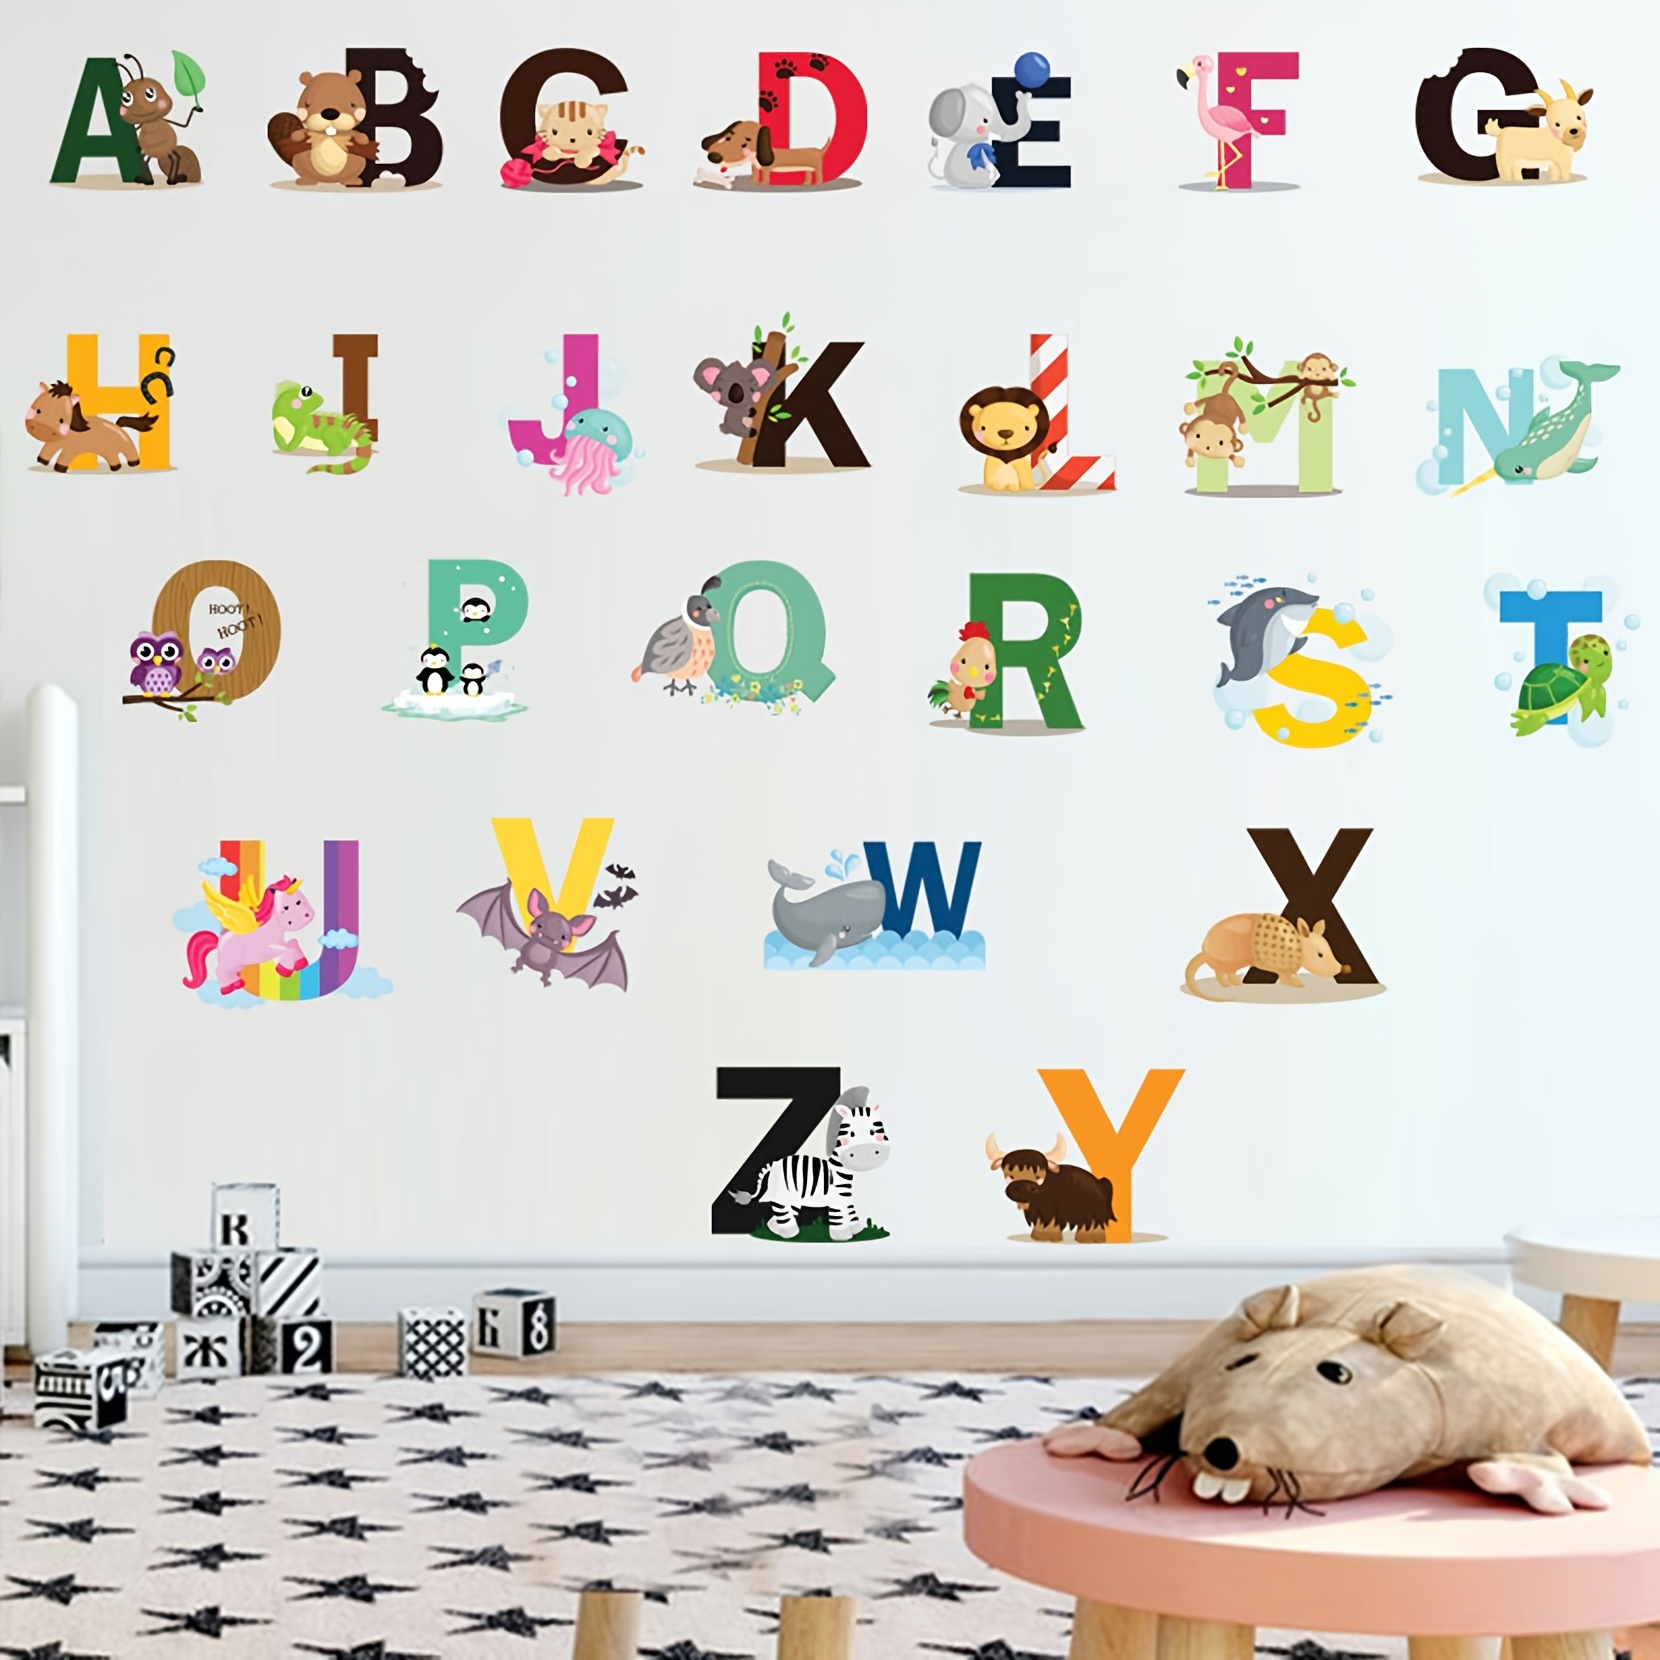 Alphabet ABC Quote Wall Decal Sticker Bedroom Home Room Art Vinyl